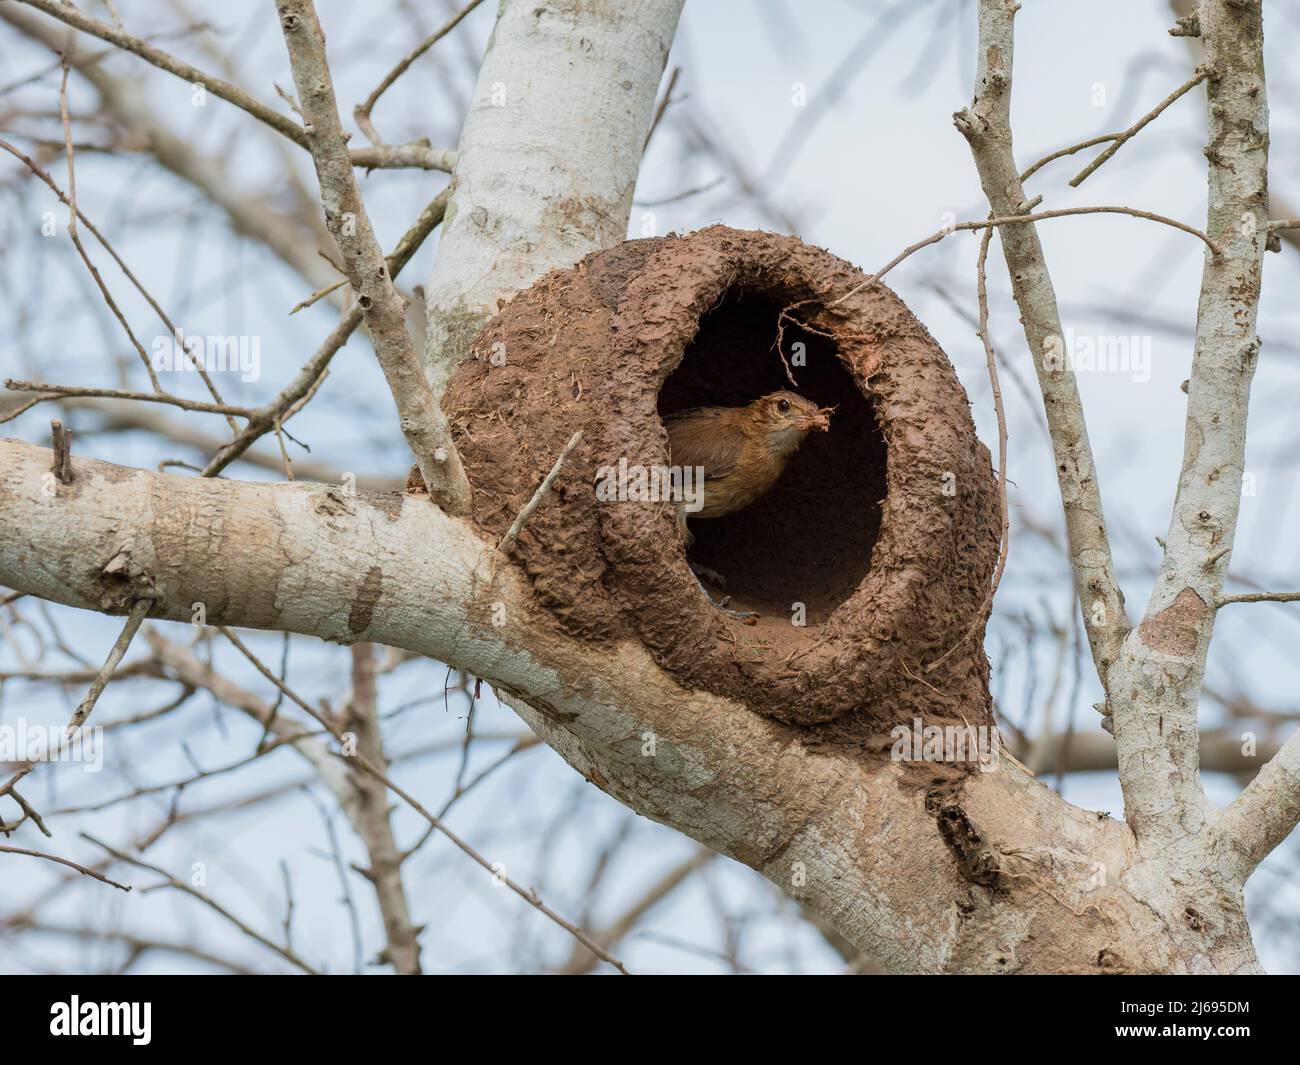 Adult red ovenbird (Furnarius rufus), building a nest in a tree, Rio Pixaim, Mata Grosso, Pantanal, Brazil, South America Stock Photo